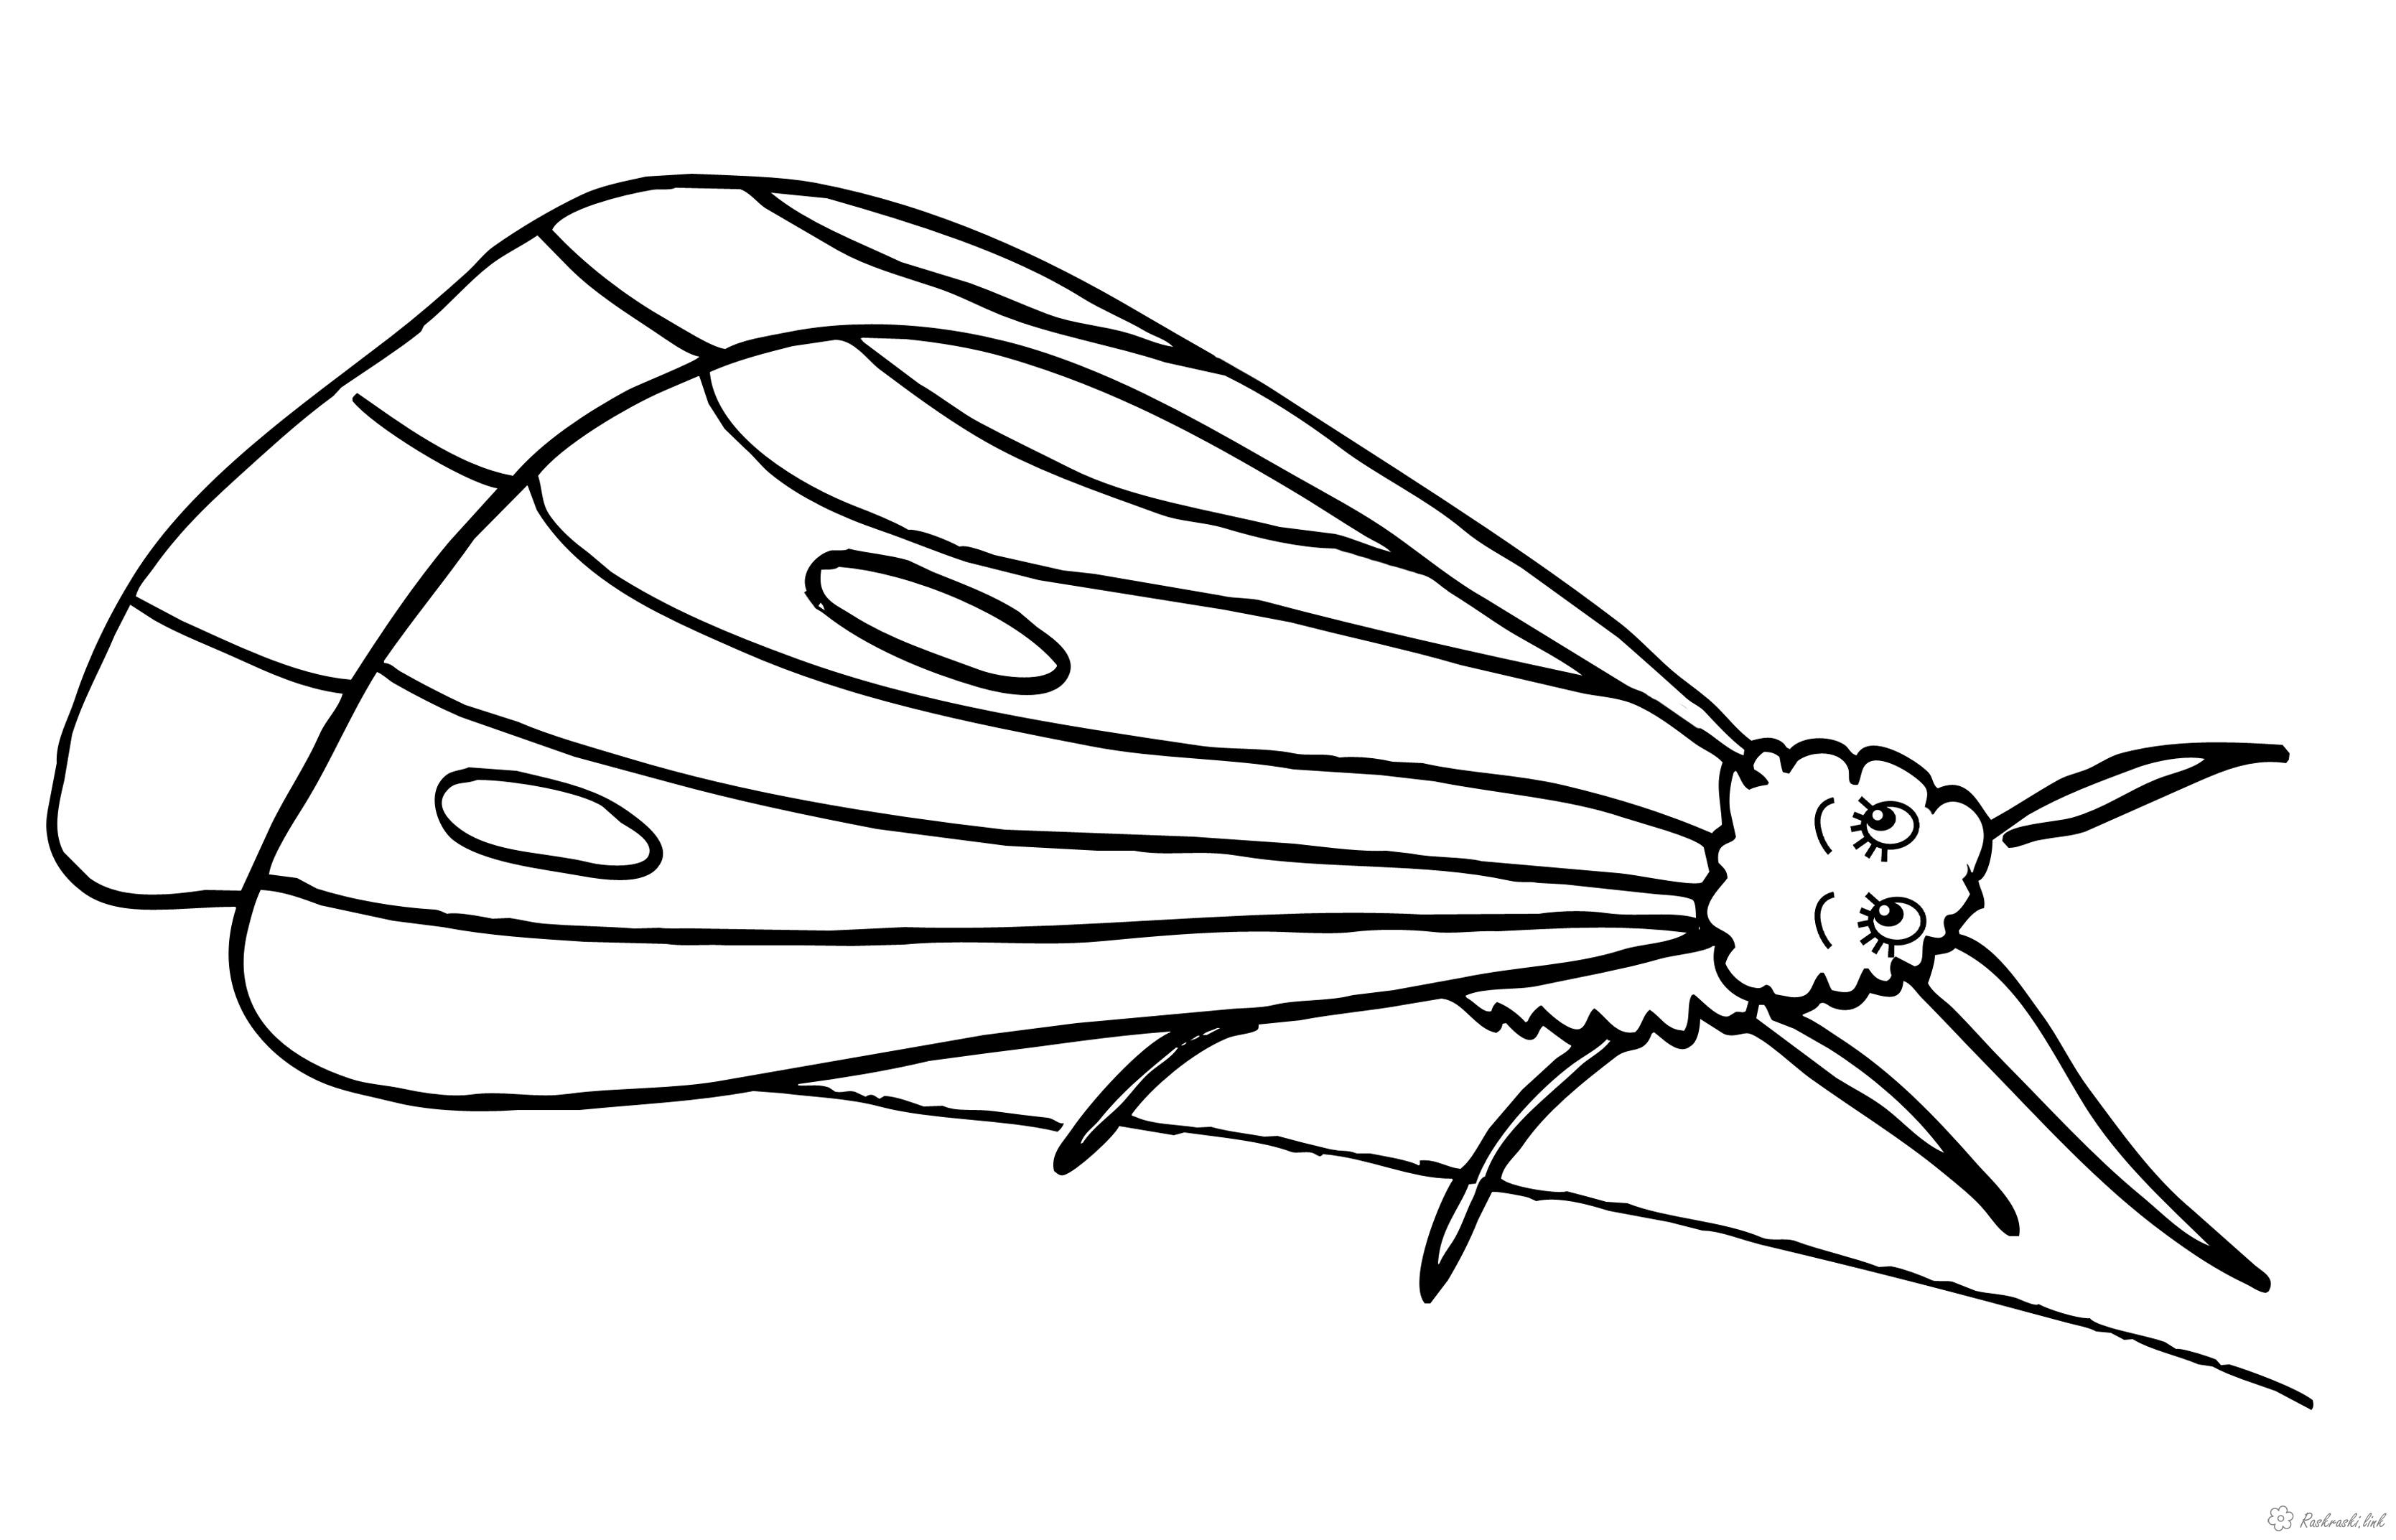 Розмальовки Комахи Розмальовка комахи, метелик, метелик